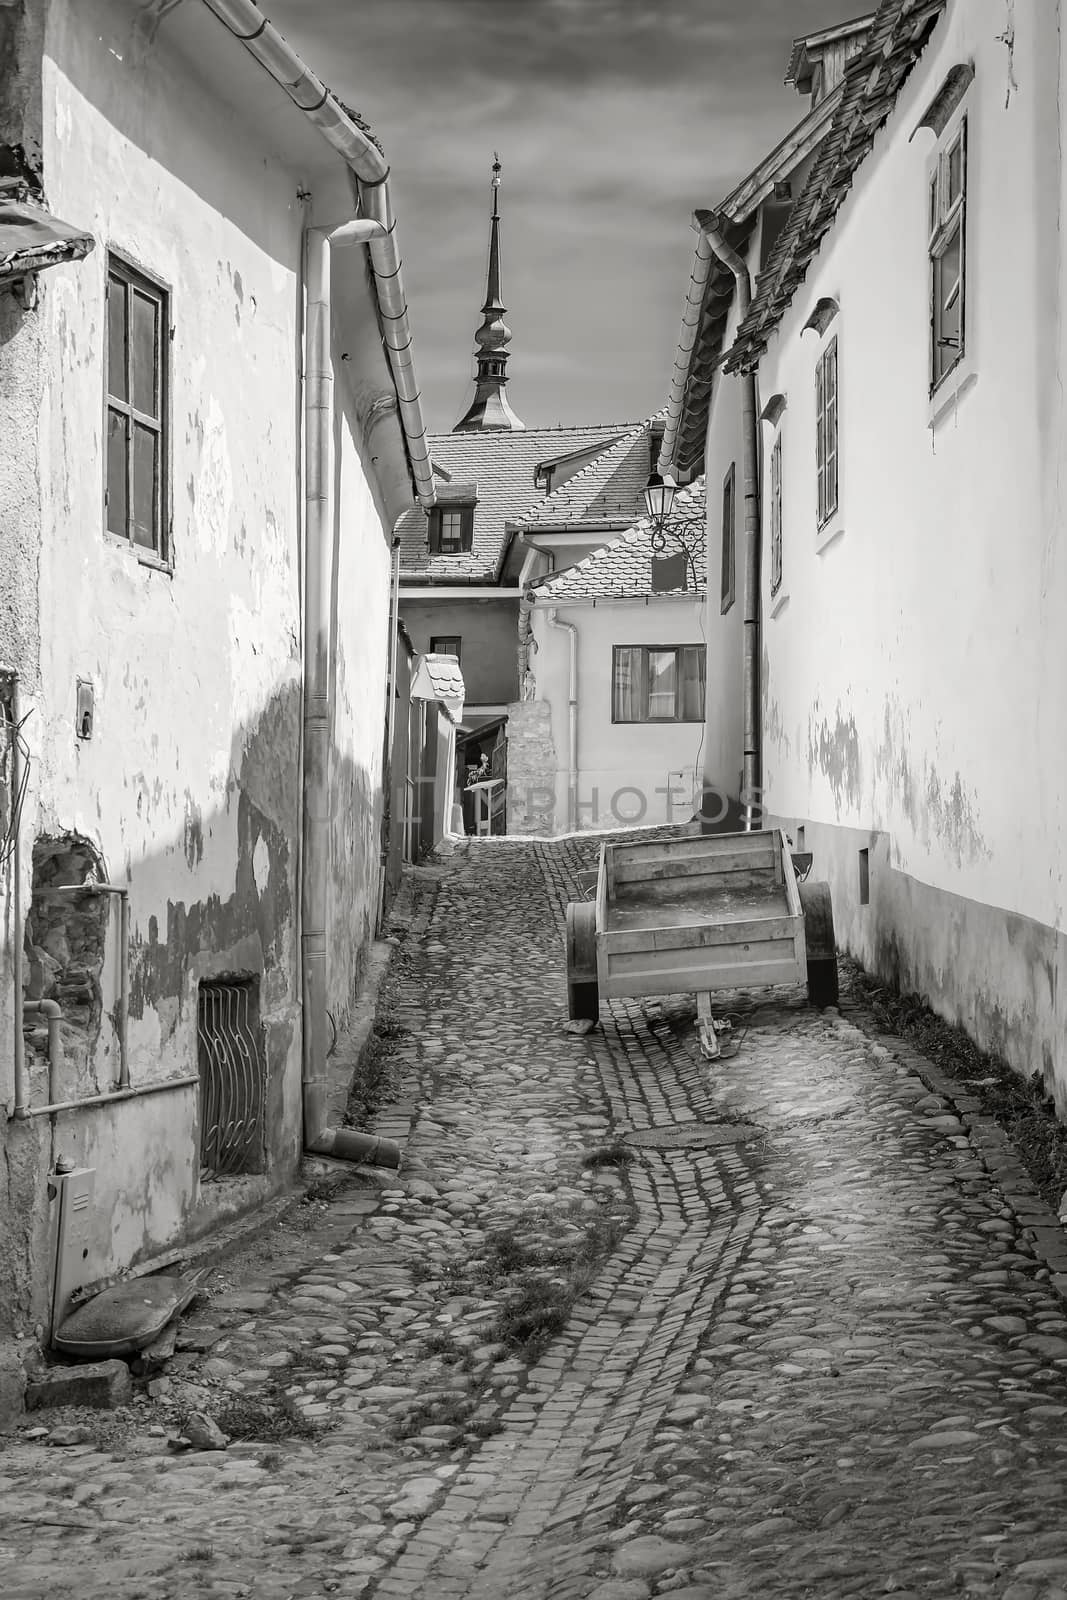 Street in Old Town of Sighisoara, Romania